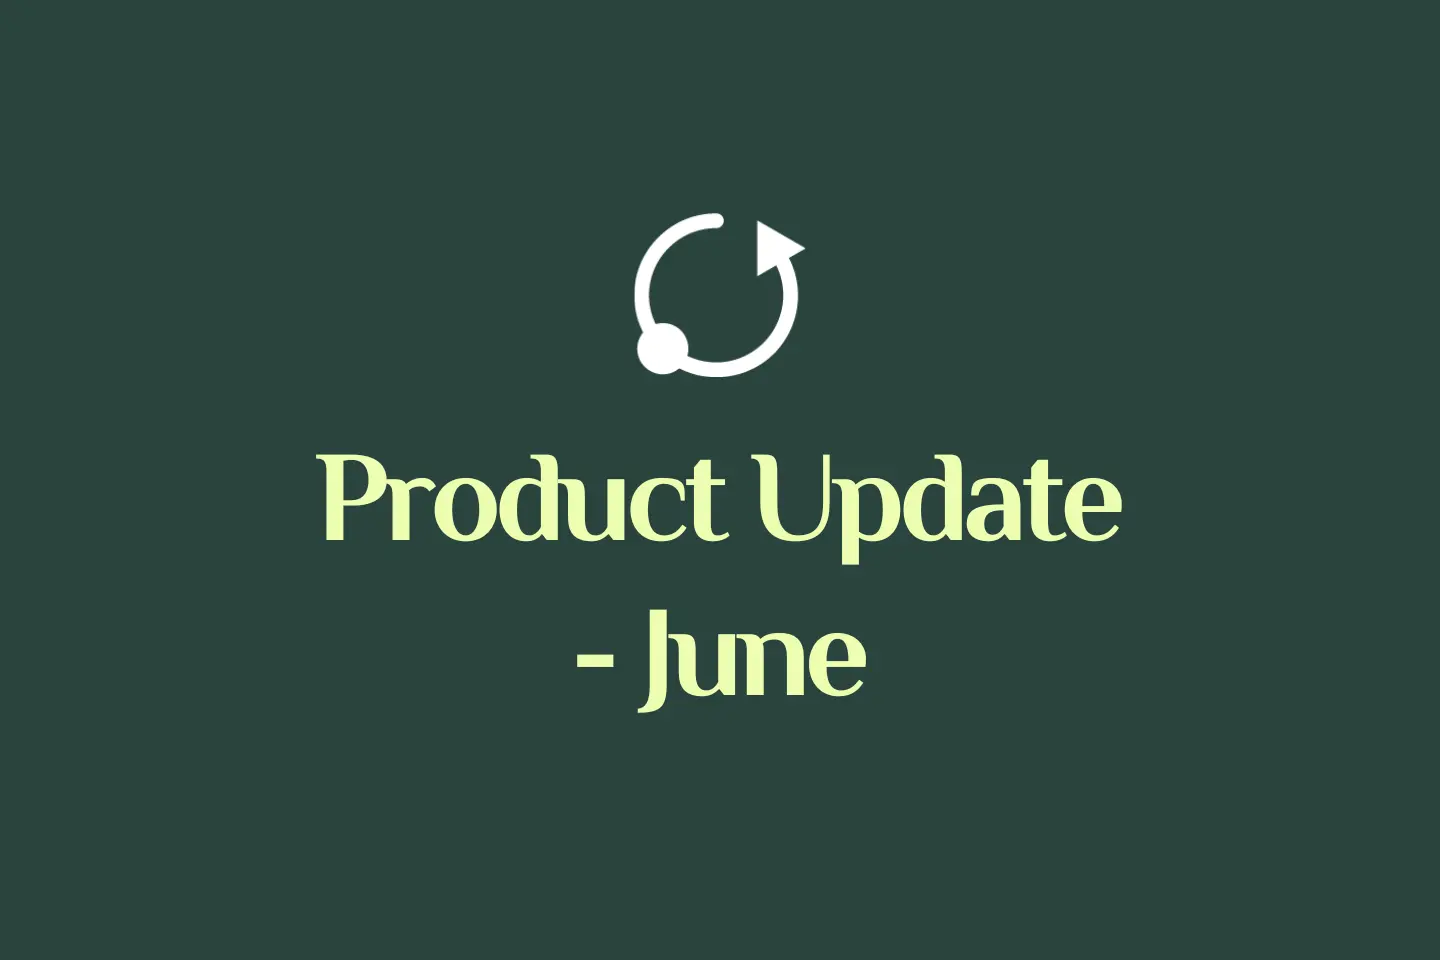 Product Update - June